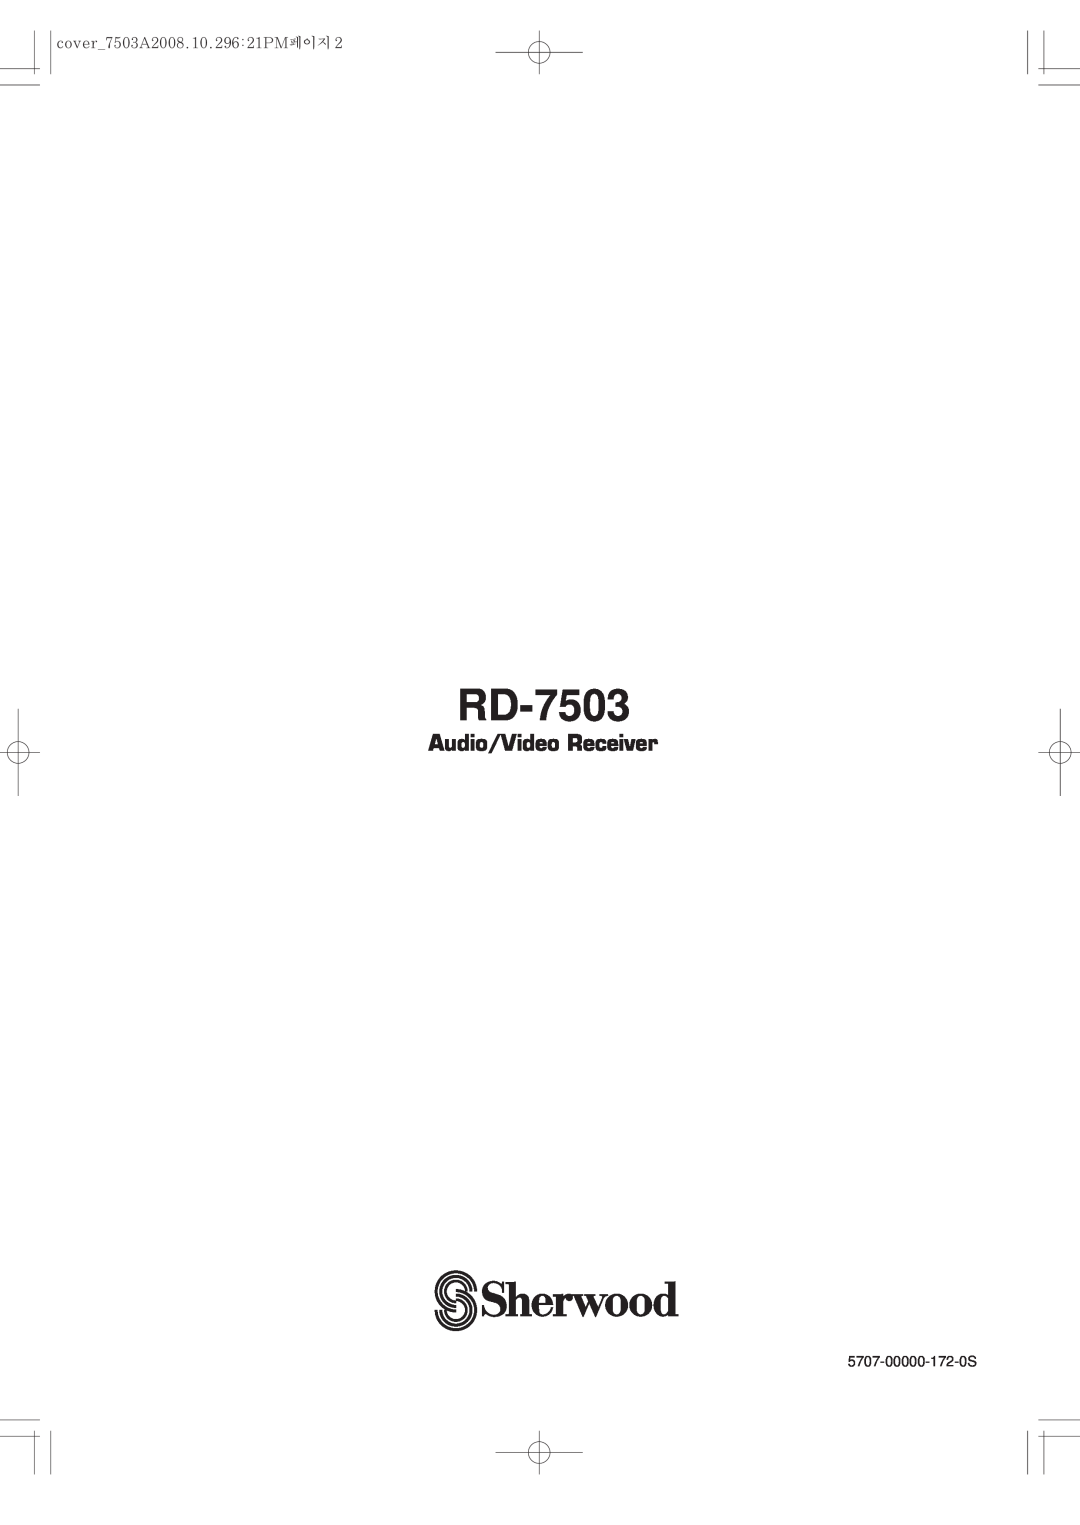 Sherwood RD-7503 manual cover 7503A2008.10.296 21PM페이지, 5707-00000-172-0S 